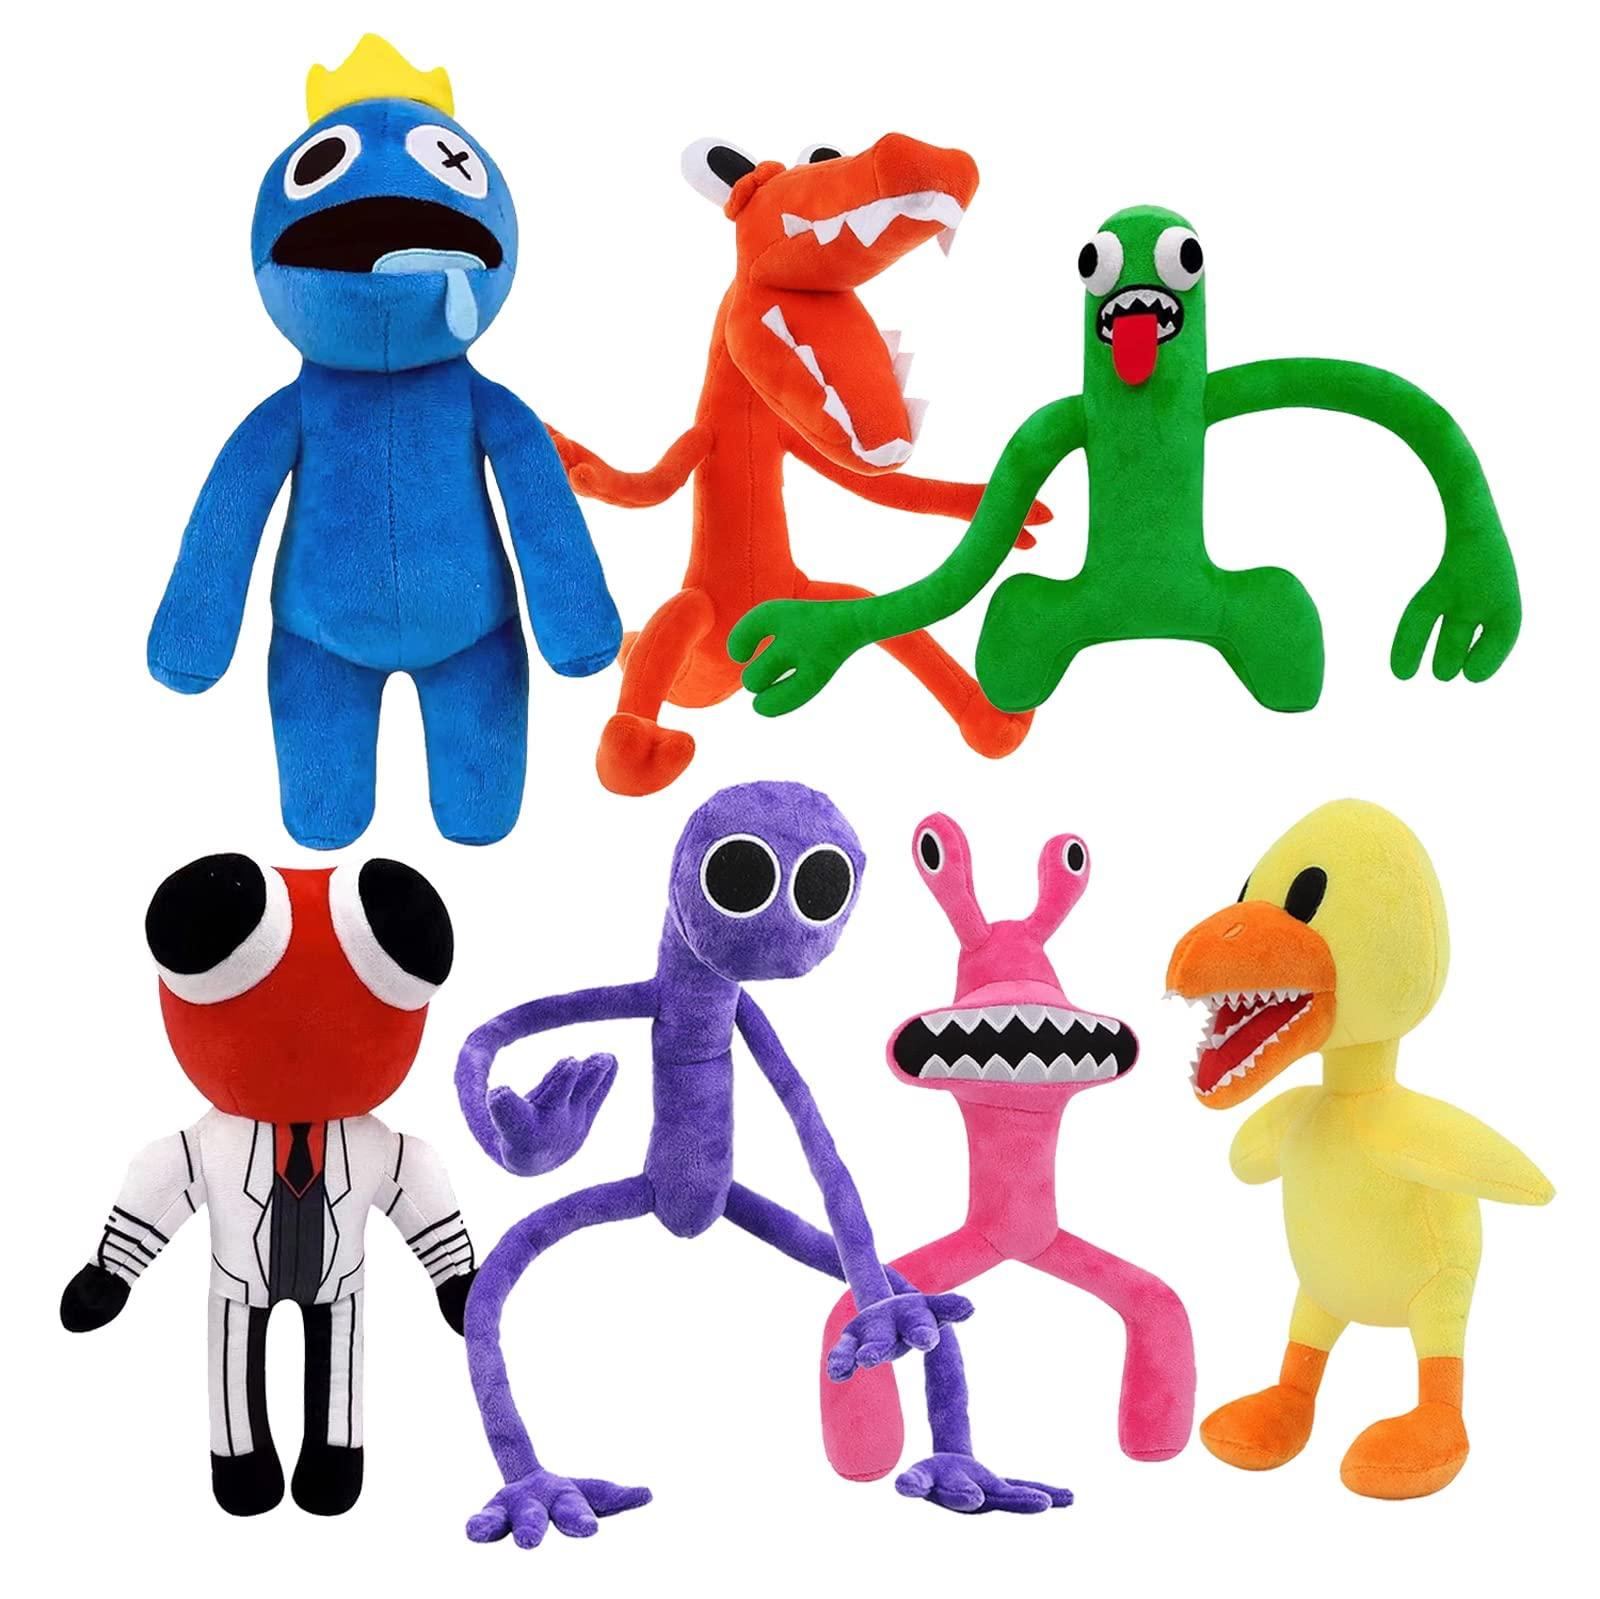 Amazoncom Rainbow Friends Plush Toy7Pcs Stuffed Animal Plush